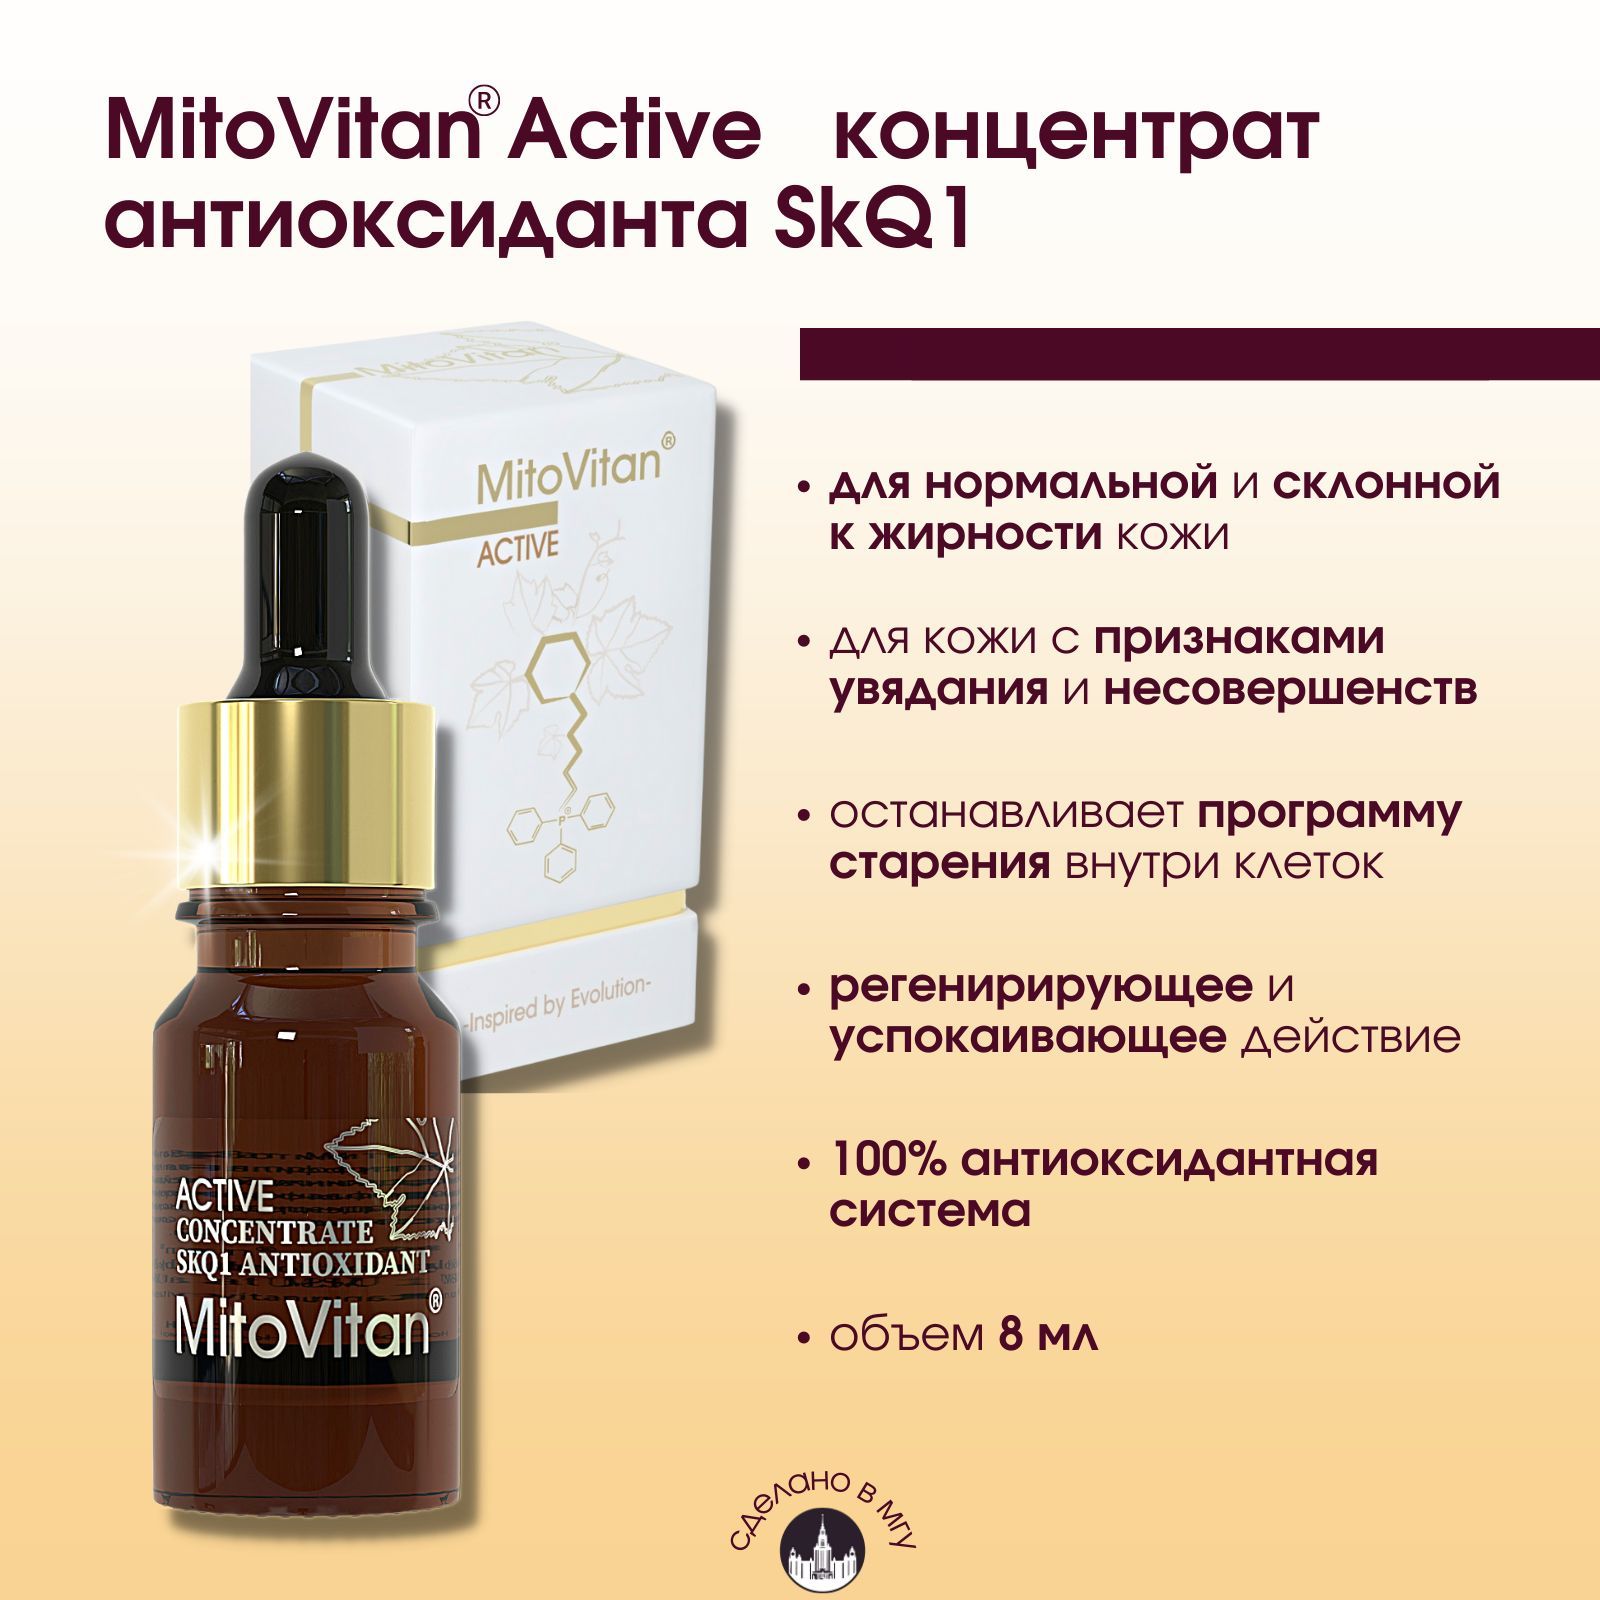 MITOVITAN Active концентрат. МИТОВИТАН Актив. MITOVITAN Active+ концентрат антиоксиданта skq1. MITOVITAN Active Set концентрат антиоксиданта skq1 для лица, шеи и области декольте. Активный концентрат